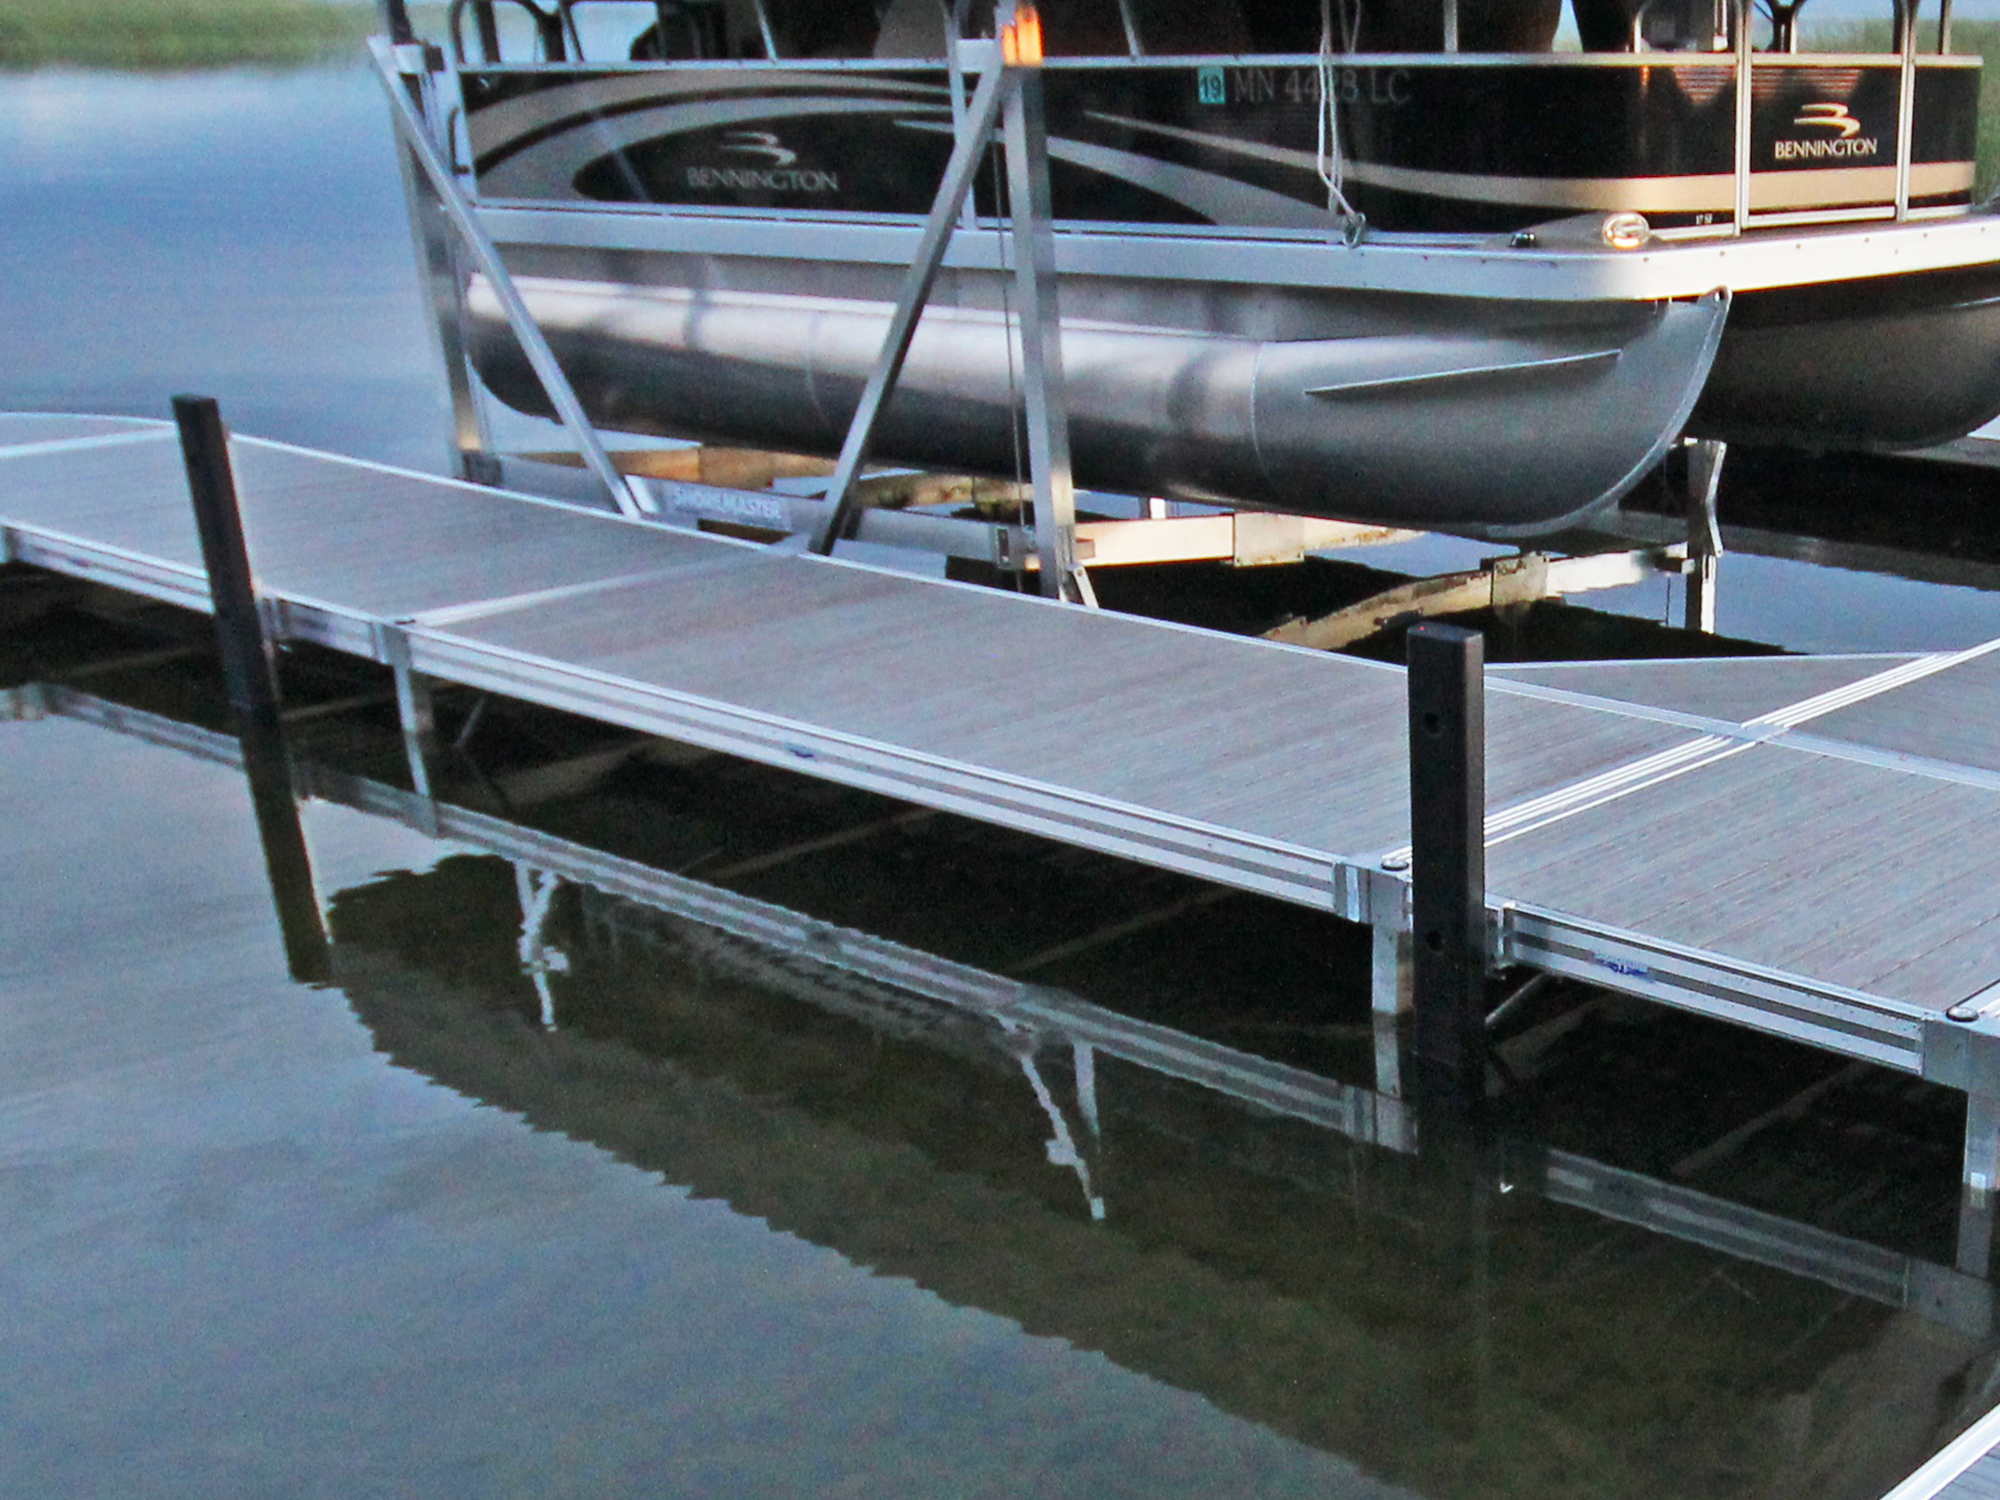 Vertical Dock Bumpers: Protective Vertical Boat Dock Bumpers | ShoreMaster